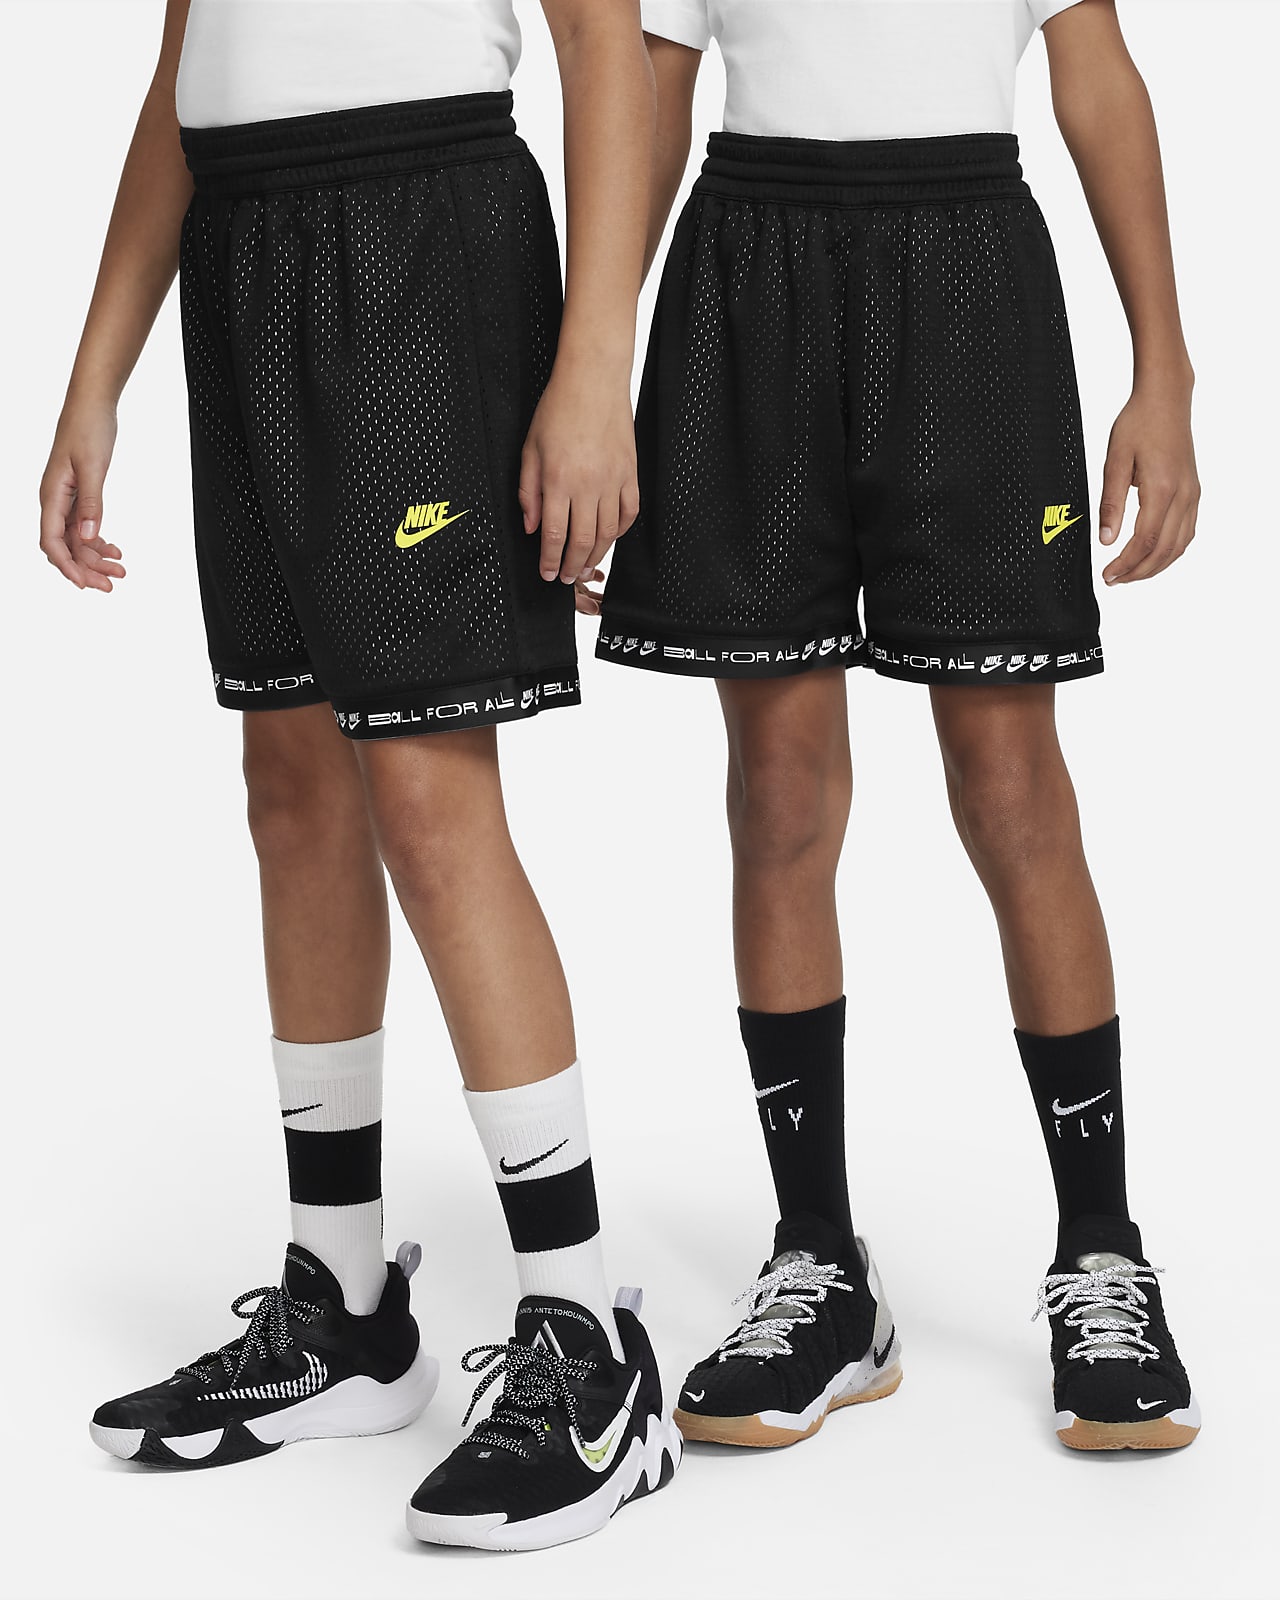 Nike Culture of Basketball Older Kids' Reversible Basketball